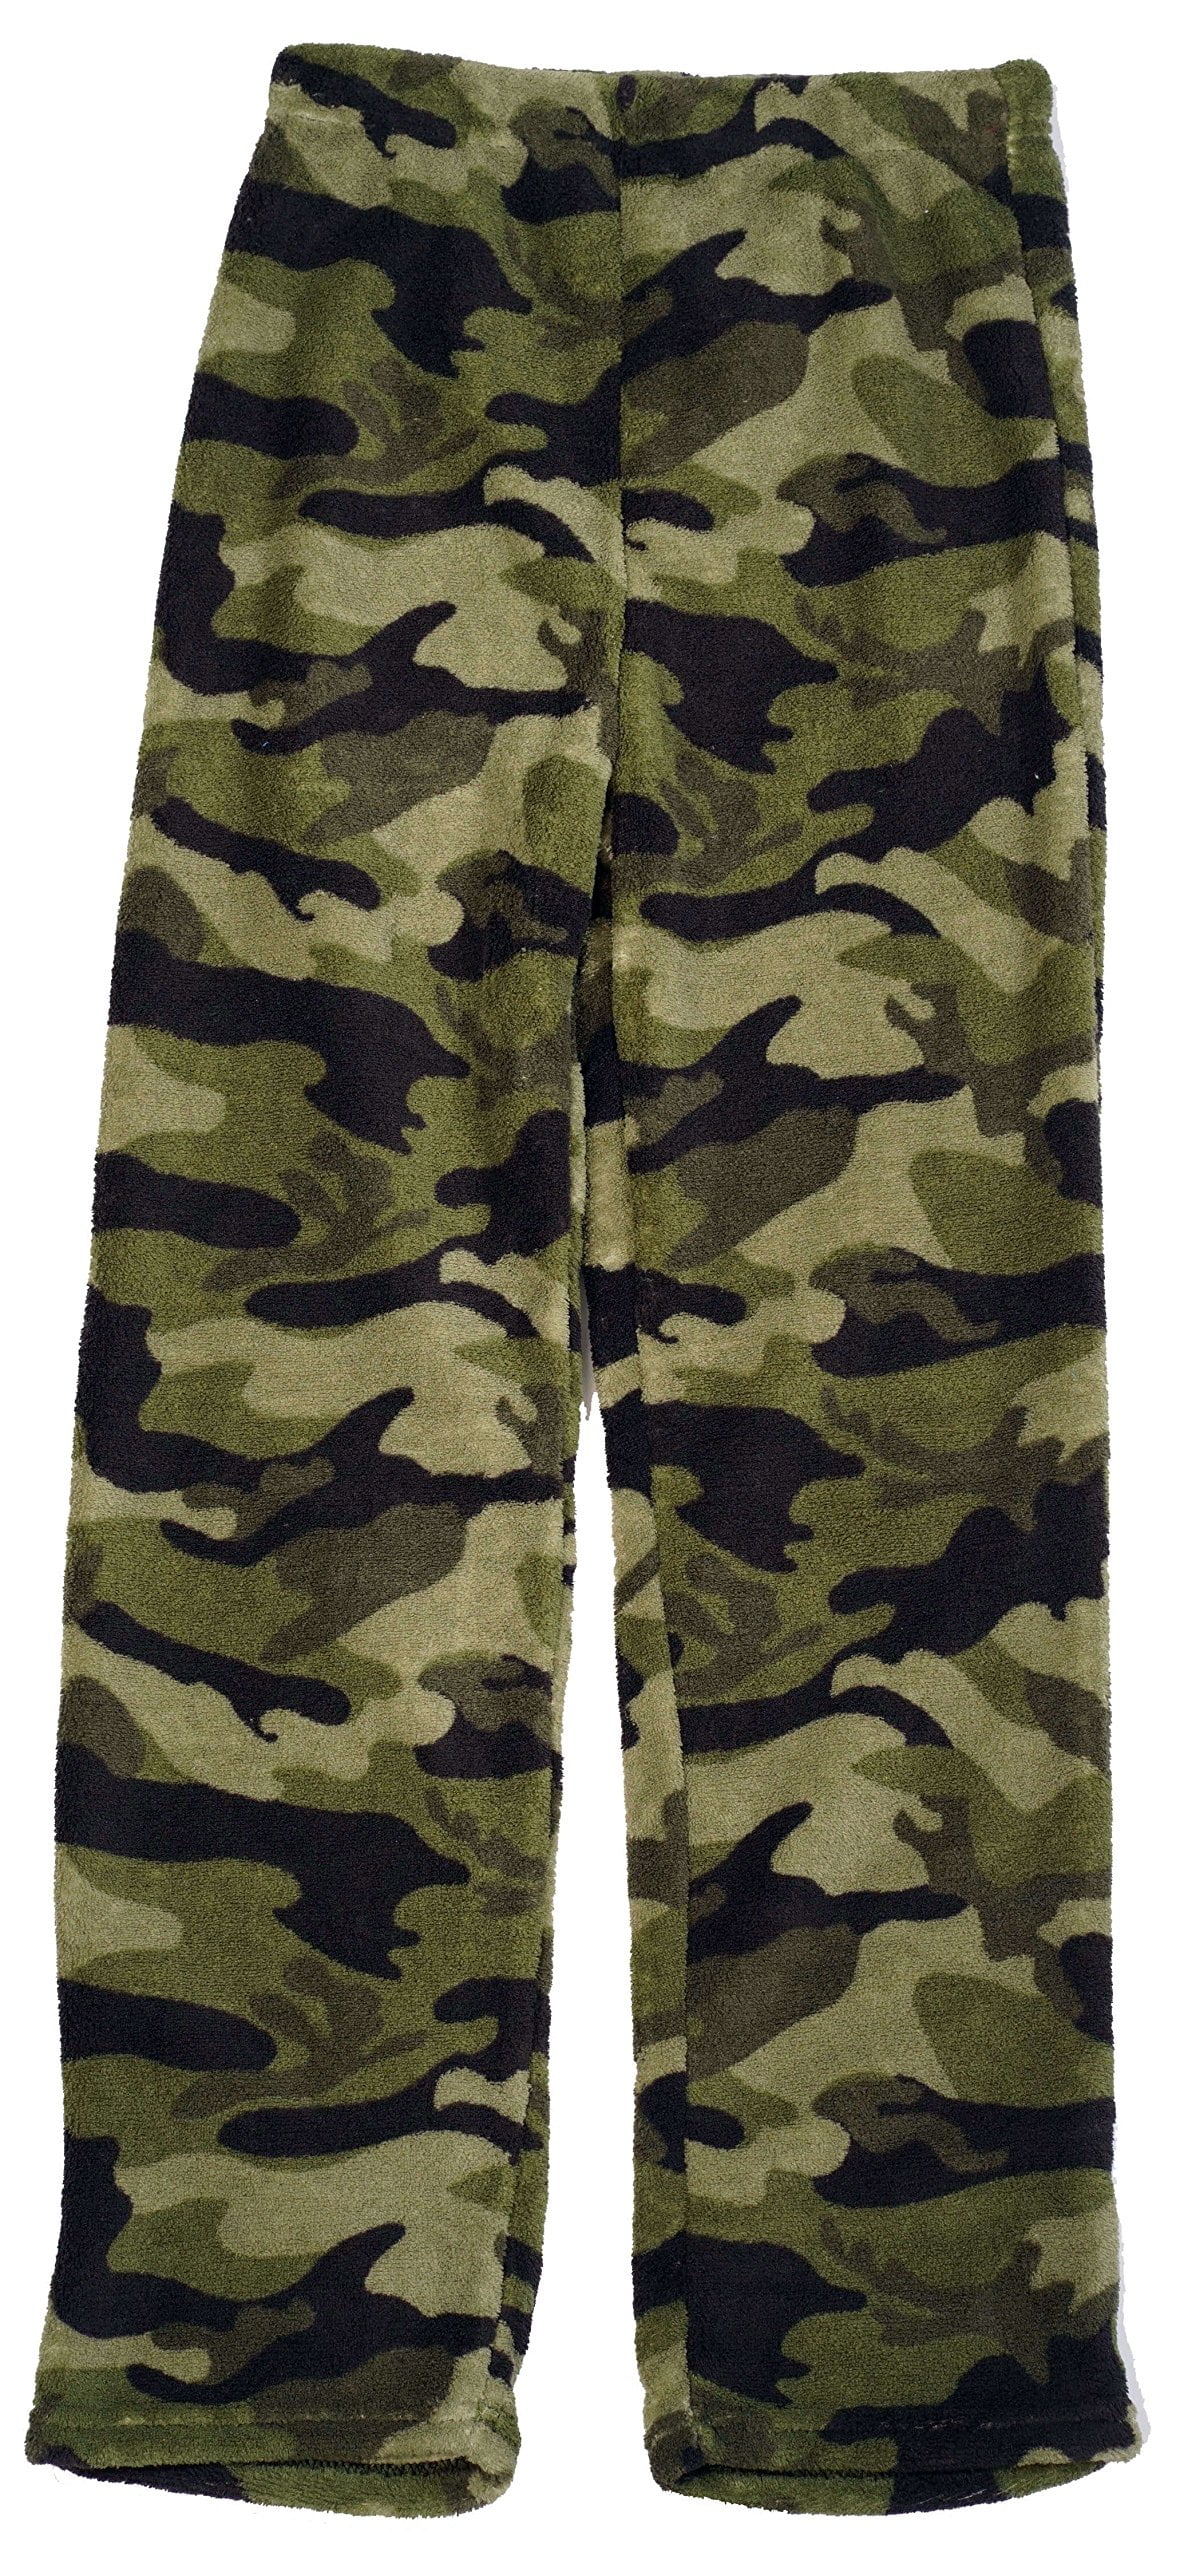 Prince of Sleep Boys' Plush Fleece Pajama Pants - Warm and Cozy Sleepwear  (Green Camouflage, 7 Years) 